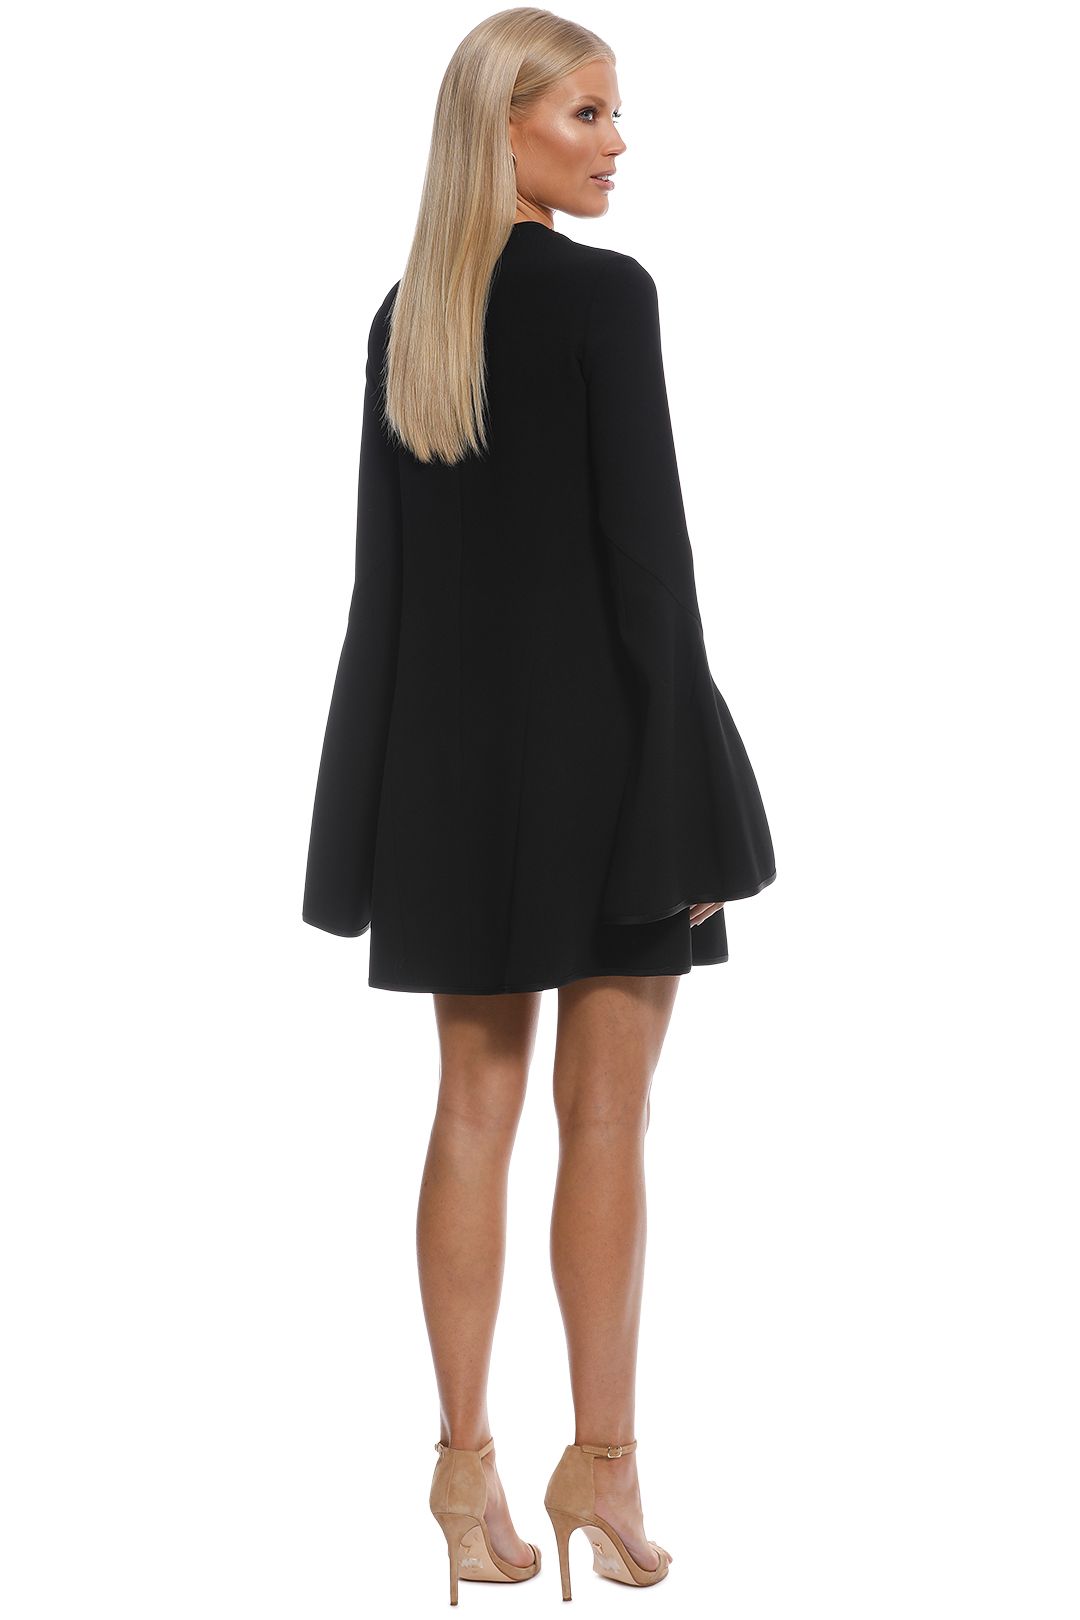 Ellery - Preacher Mini Dress - Black - Back